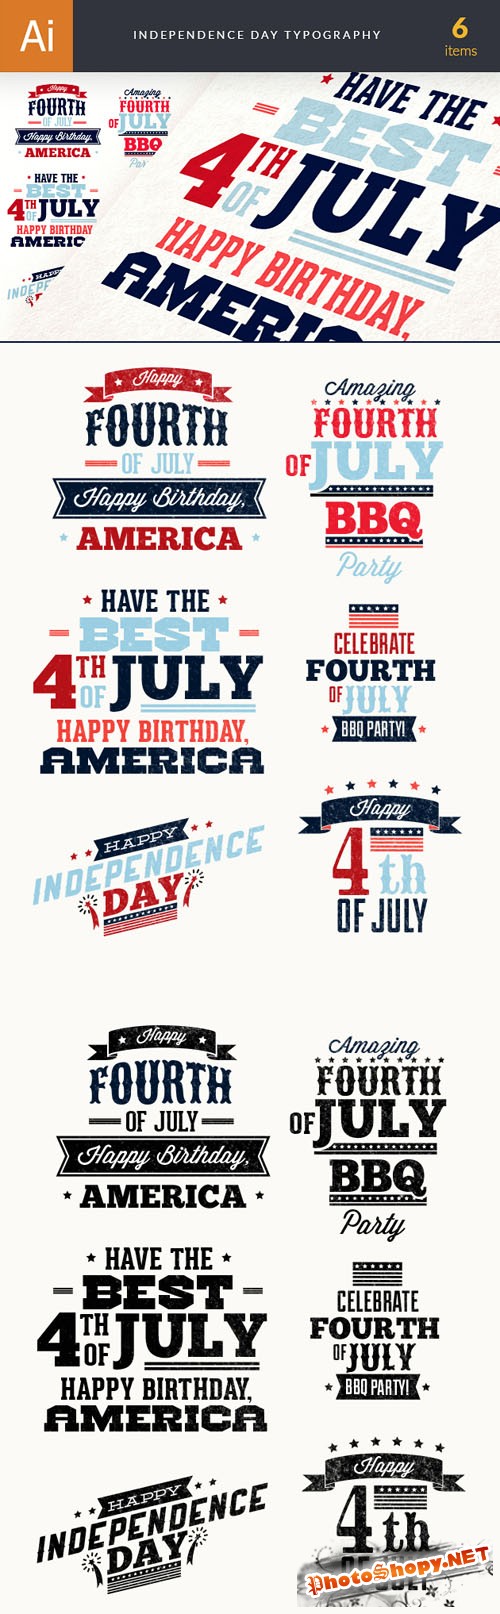 Designtnt - Independence Day Typography Set